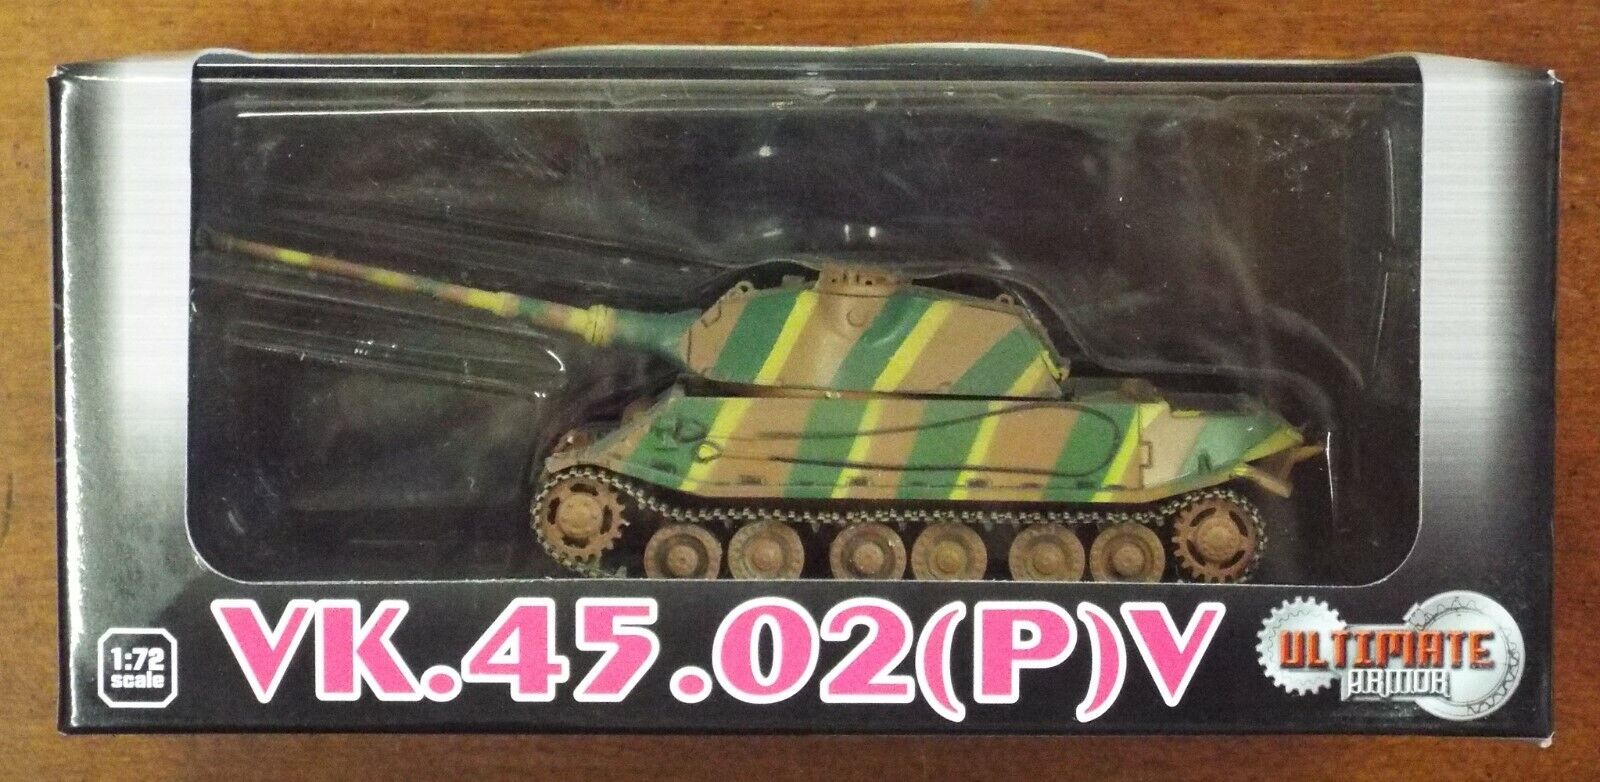 1/72 Finished VK.45.02(P)V Heavy Tank Dragon Armor #60587 Factory Sealed MISB